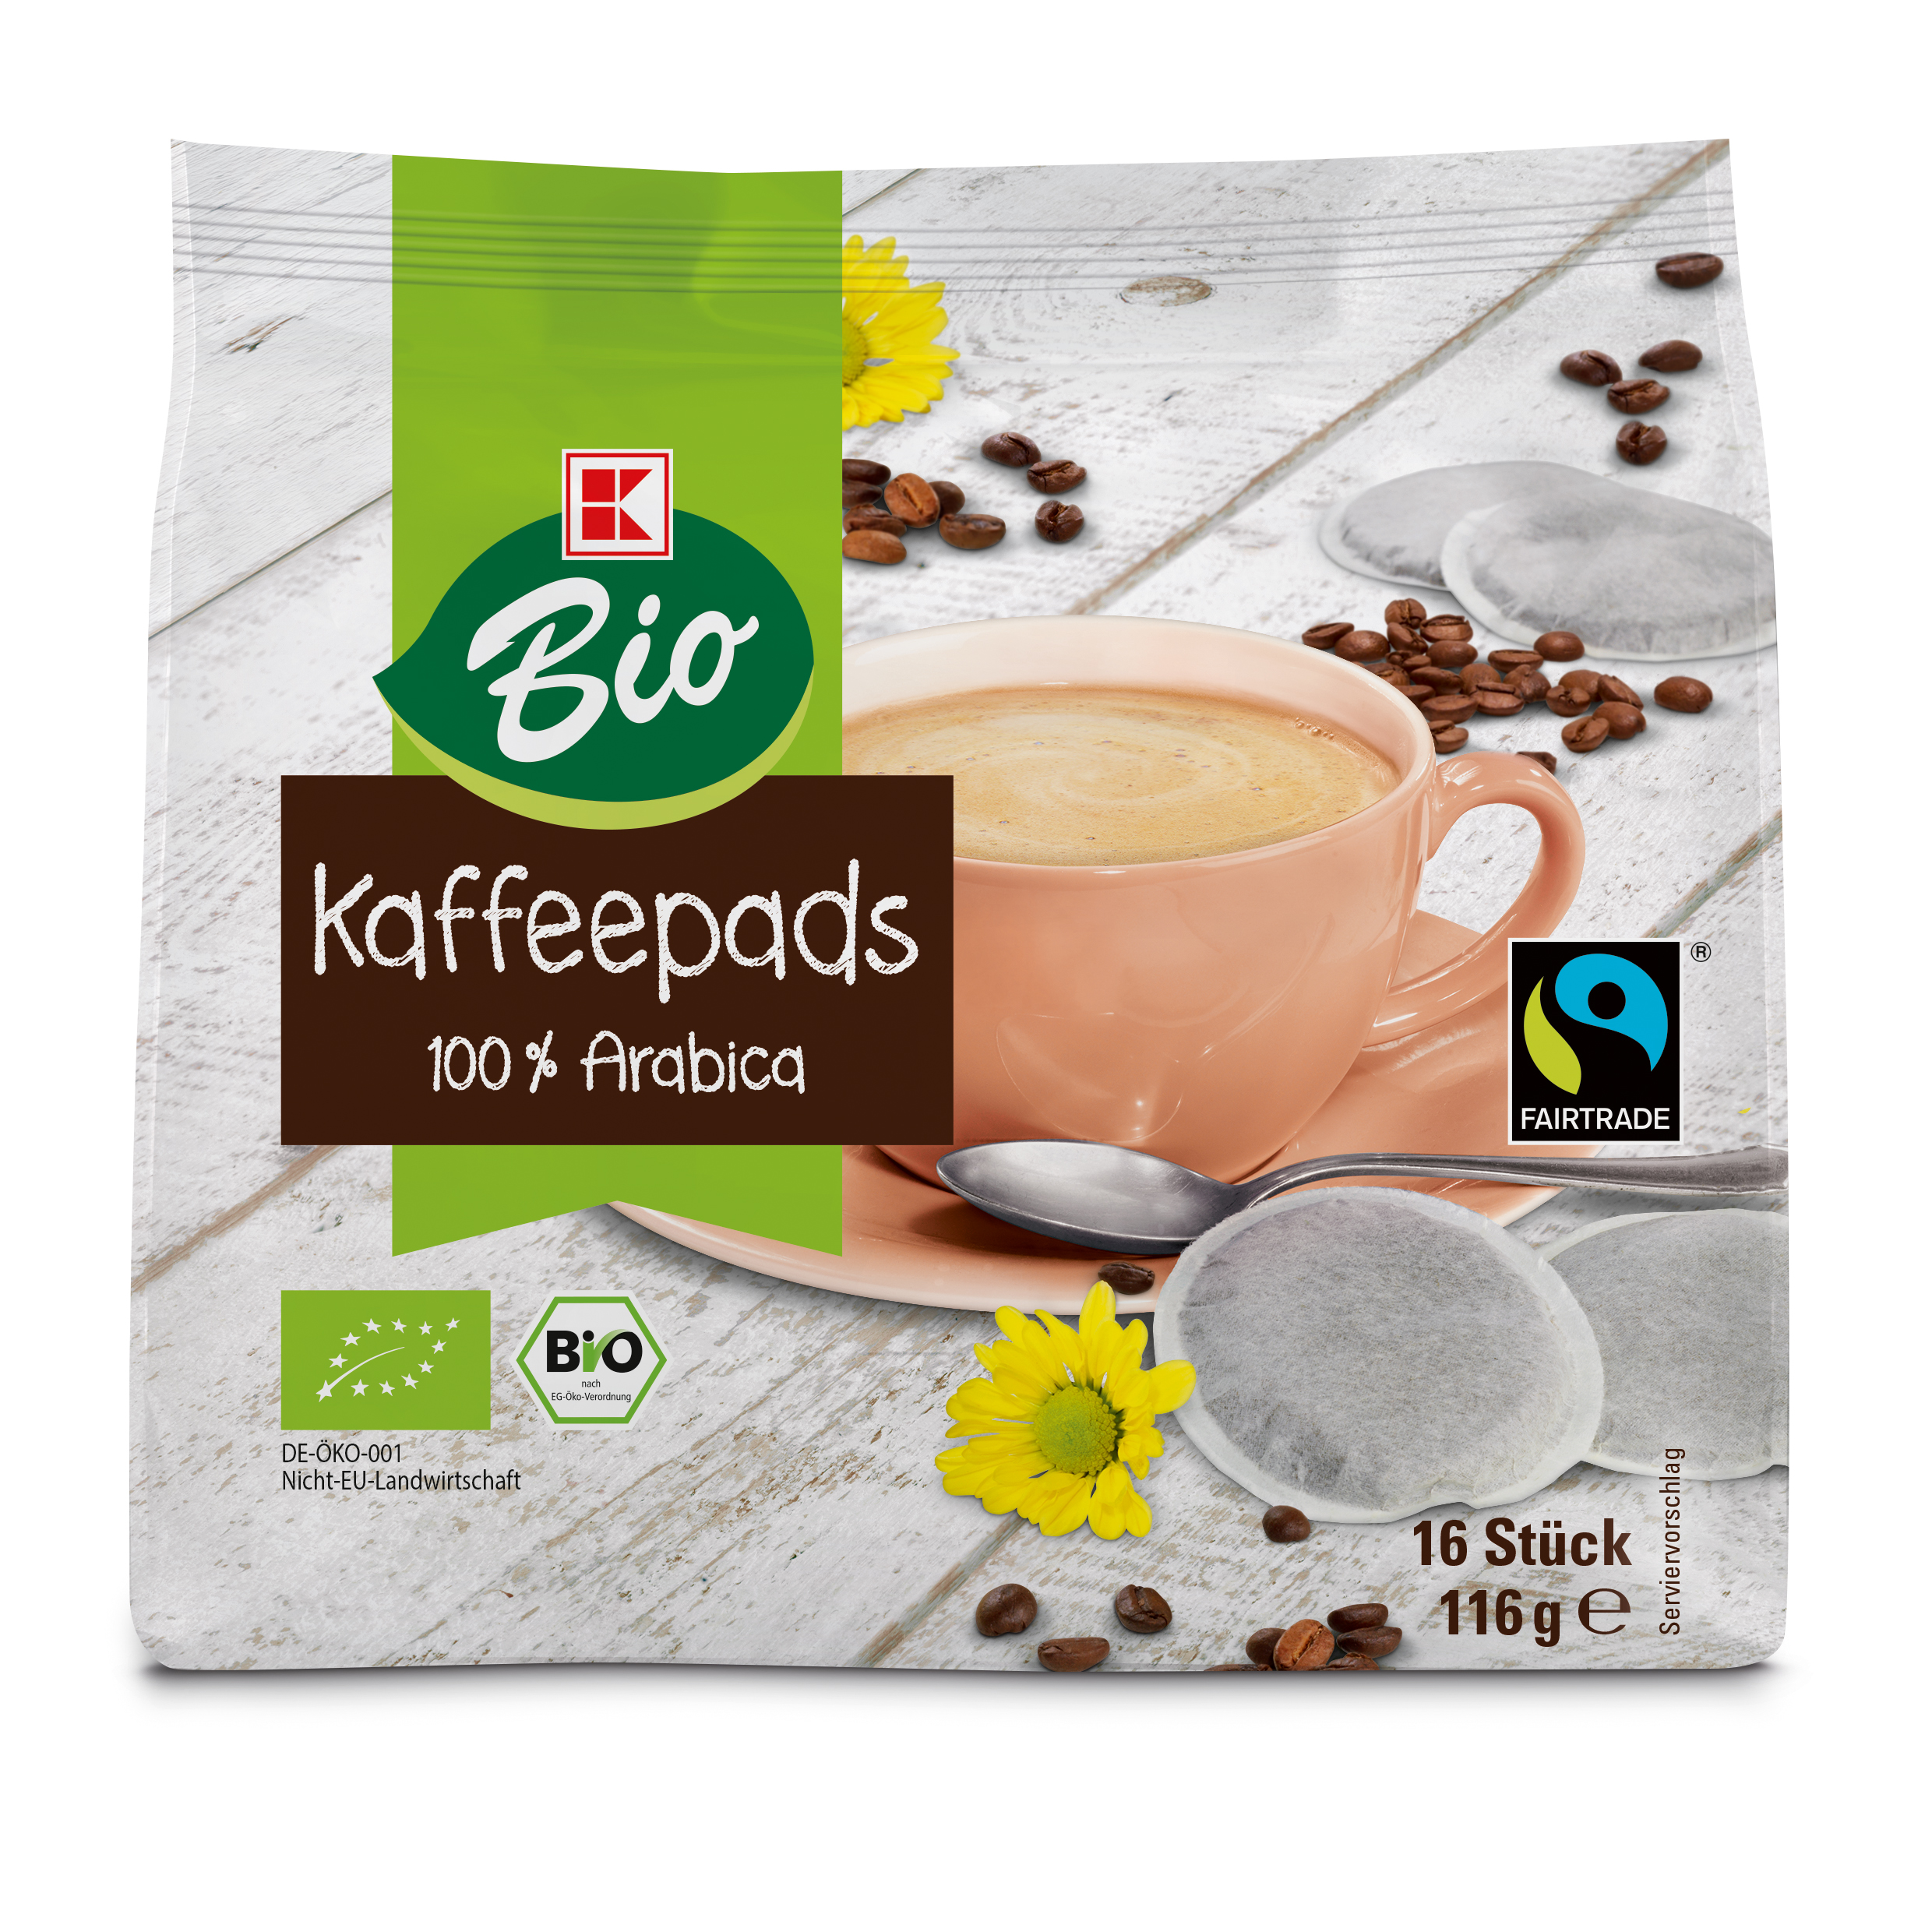 K-Bio K-Bio Kaffeepads Fairtrade-